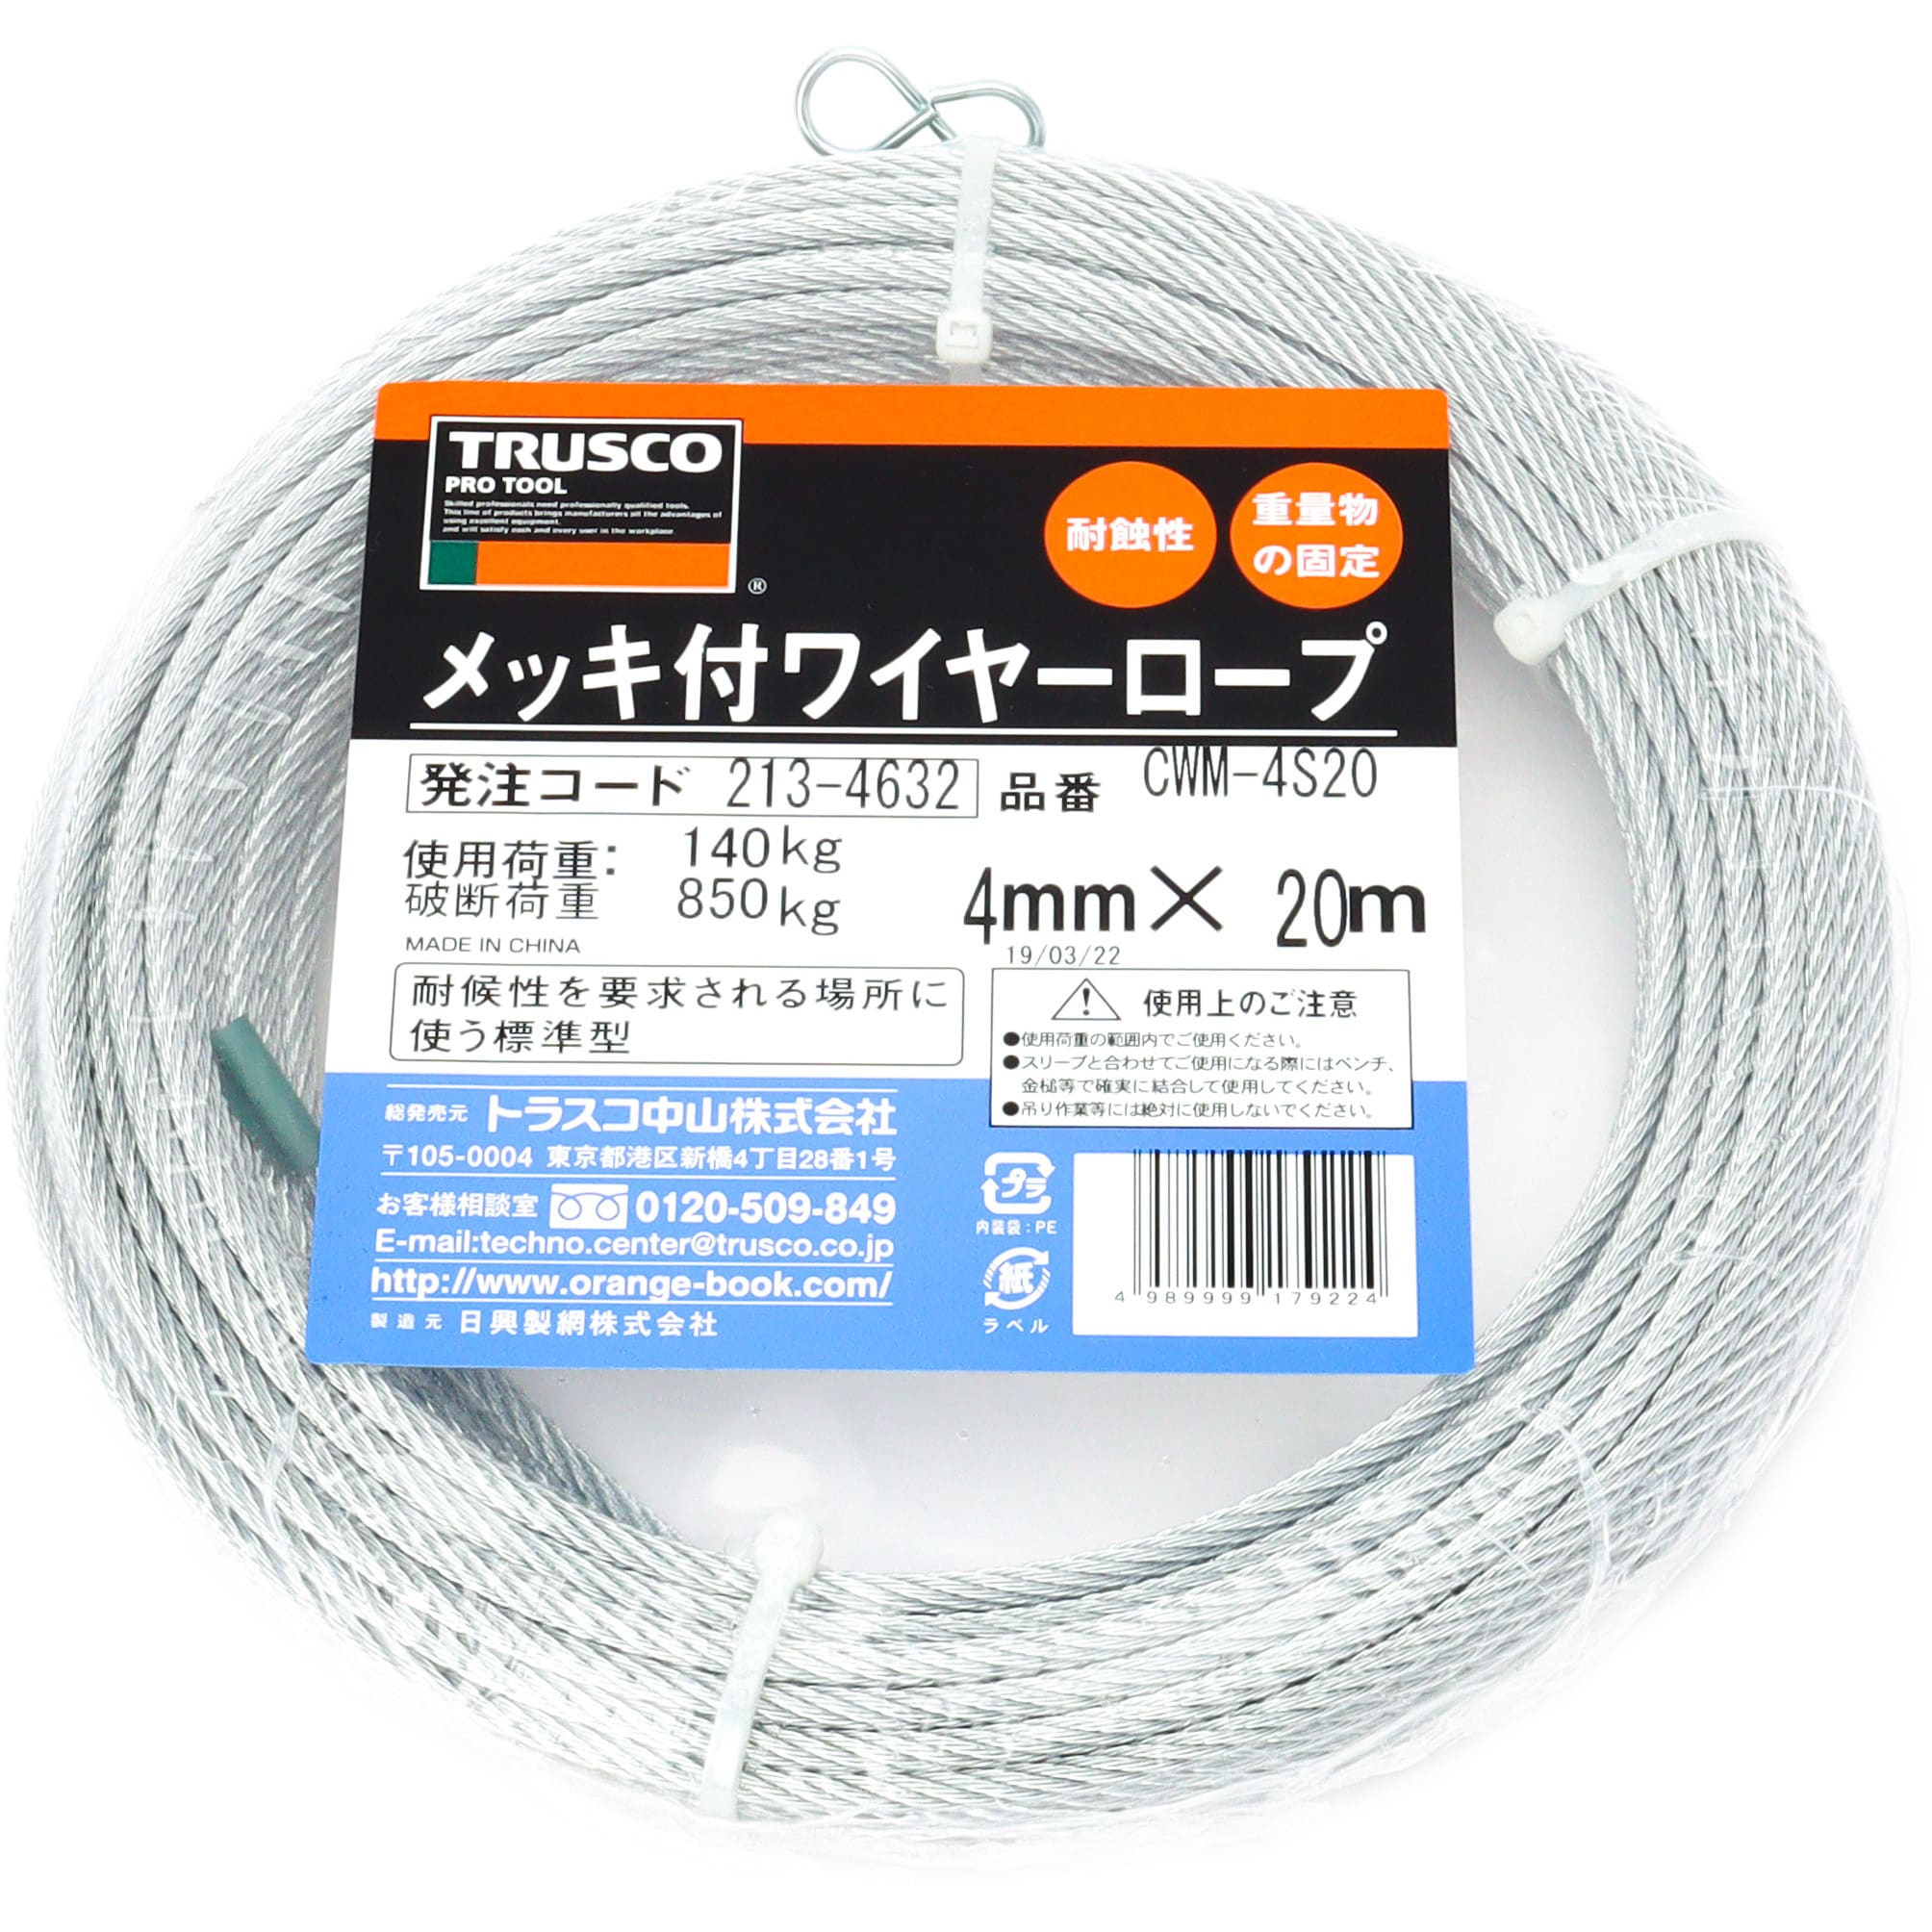 TRUSCO(トラスコ) ステンレスワイヤロープ Φ3.0mm×100m CWS-3S100 金物、部品